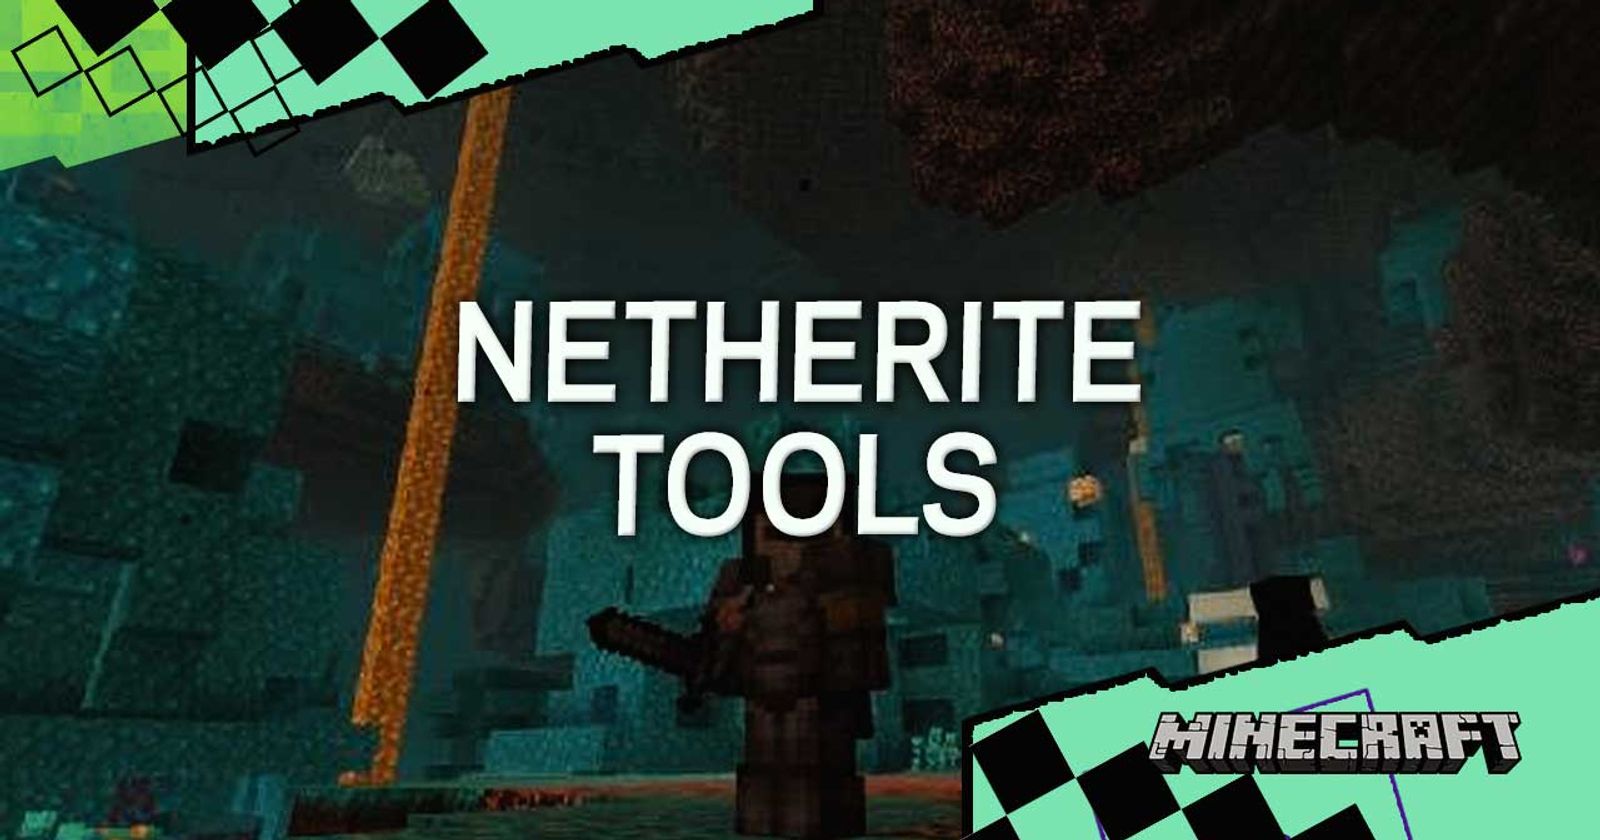 Minecraft: Nether update - is Netherite better than diamonds